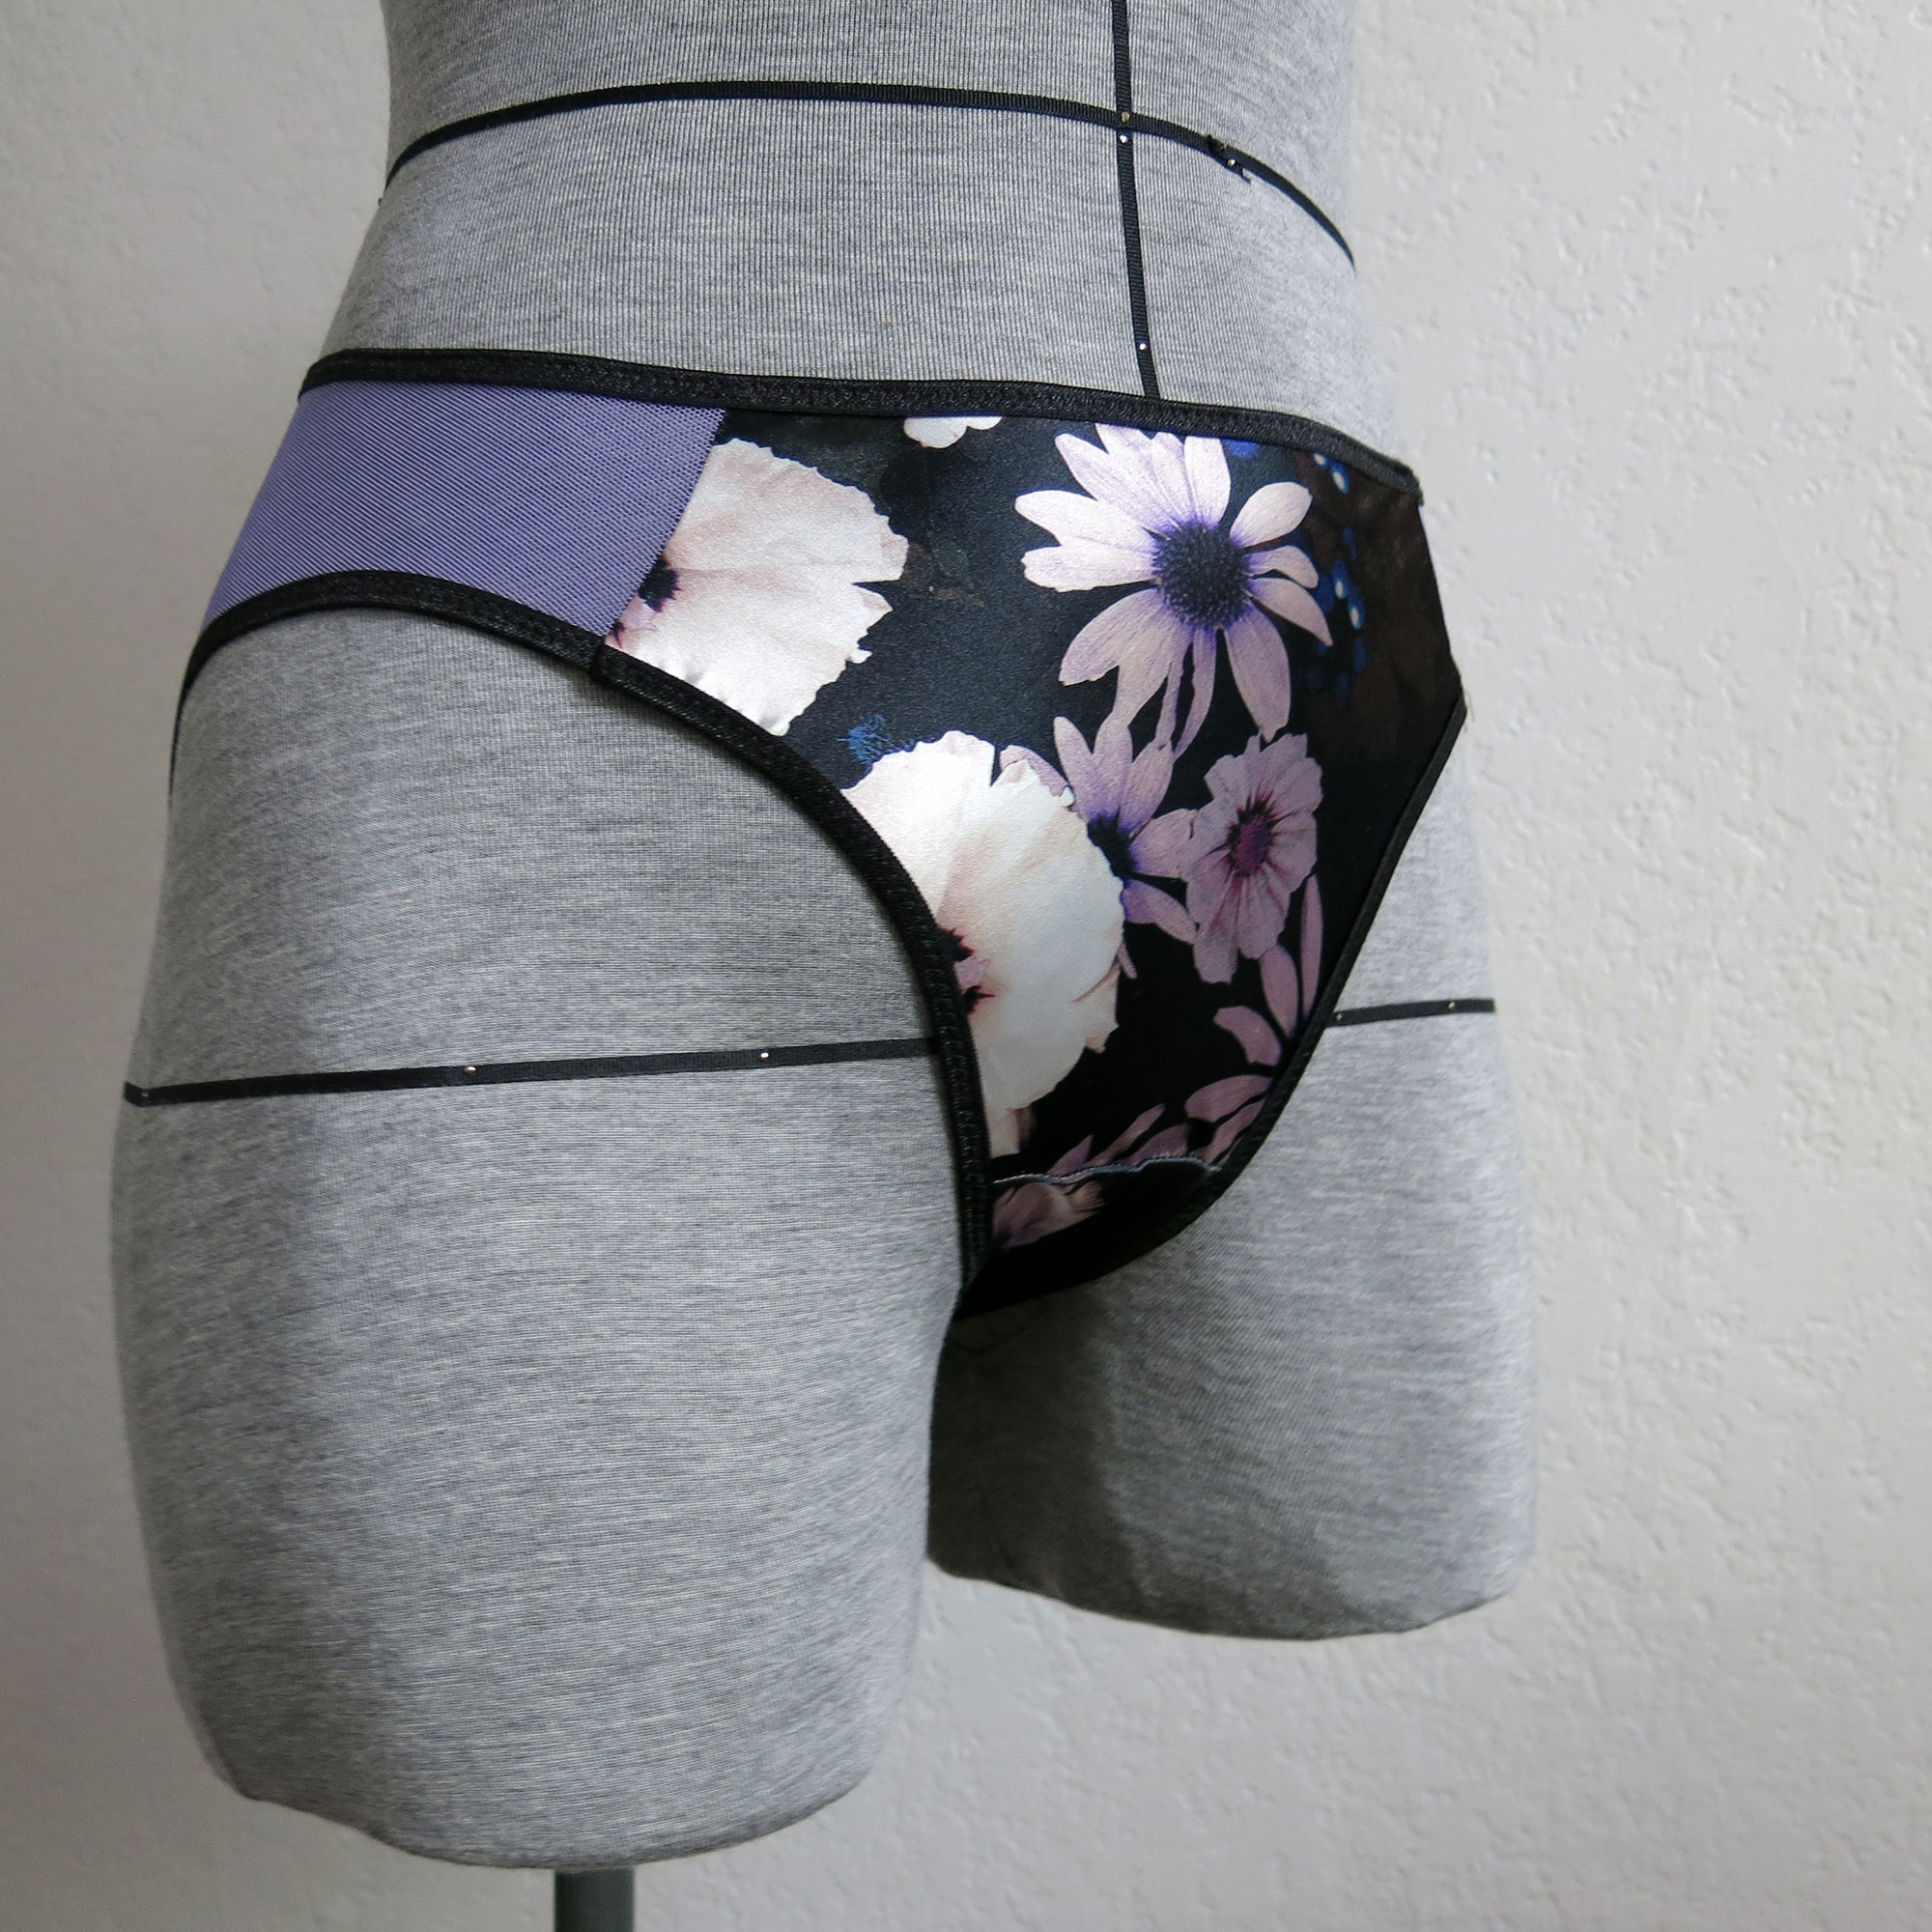 PDF Primrose Dawn Sewing Pattern- Reyna Hi-Cut/French Cut Panty – Stitch  Love Studio